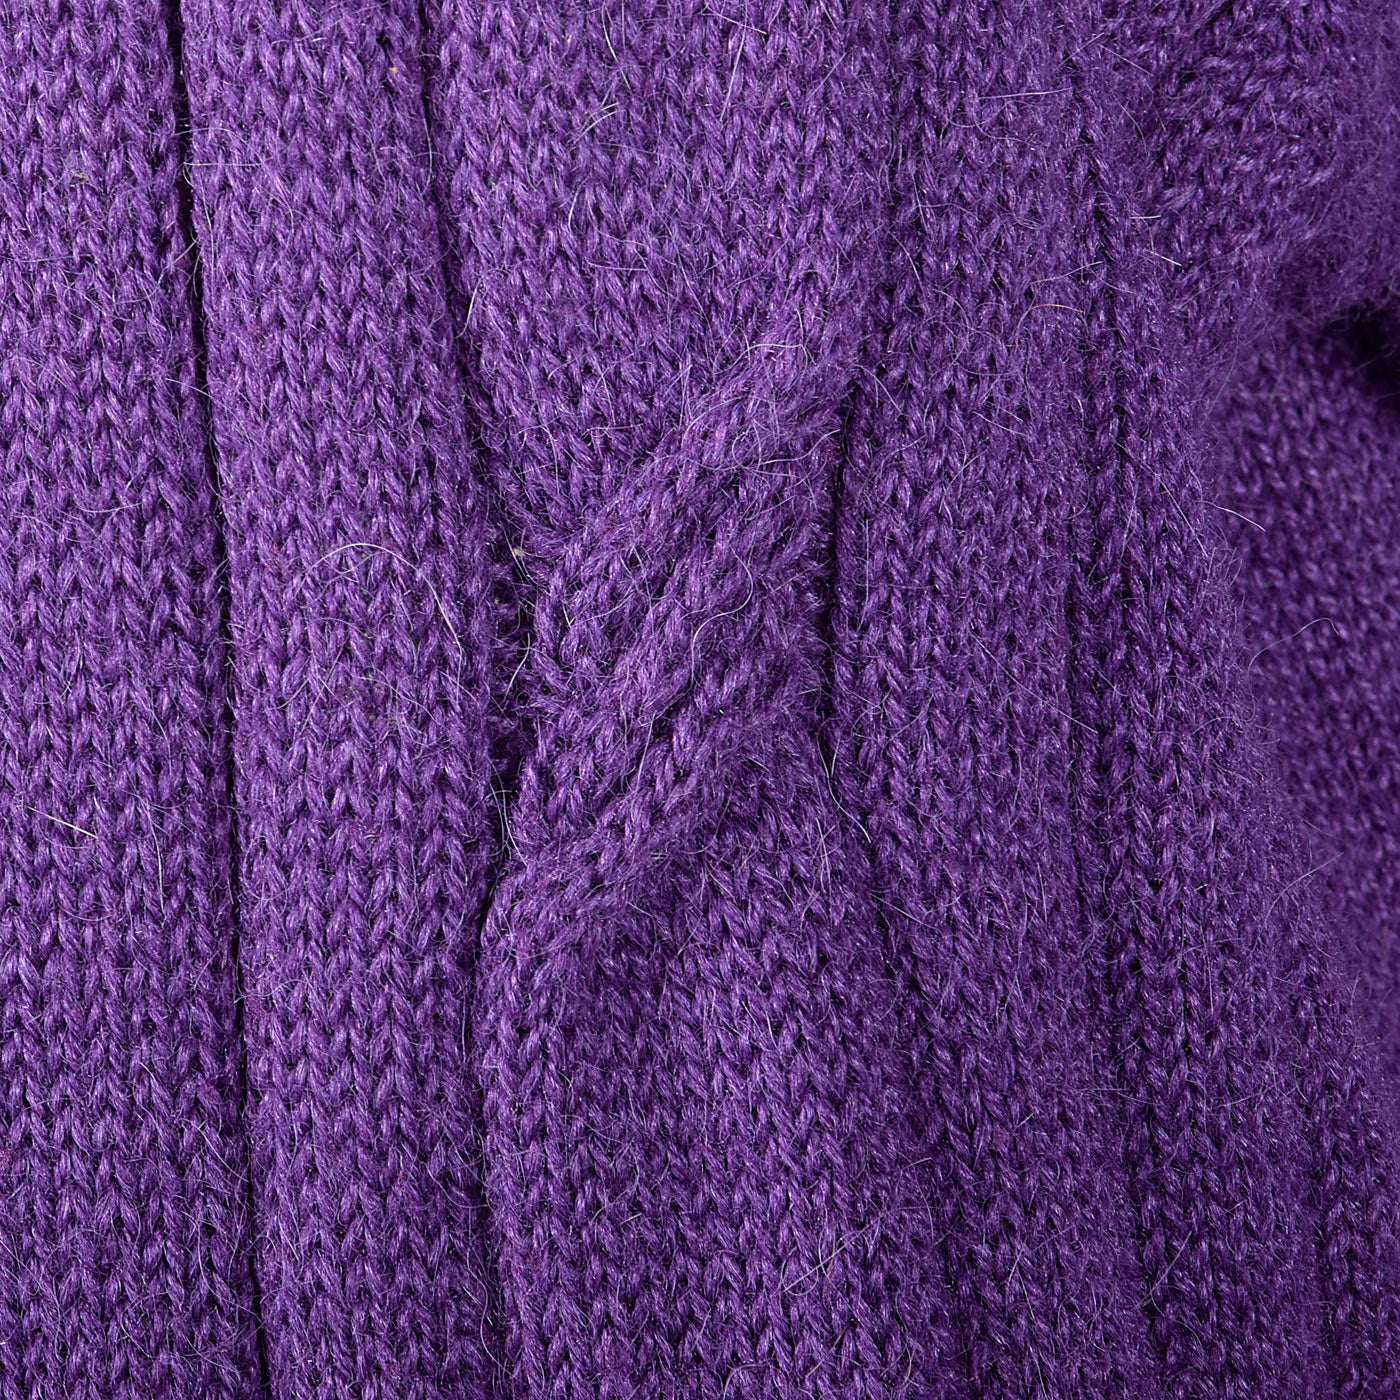 1980s Bottega Veneta Purple Mohair & Silk Blend Cable Knit Sweater